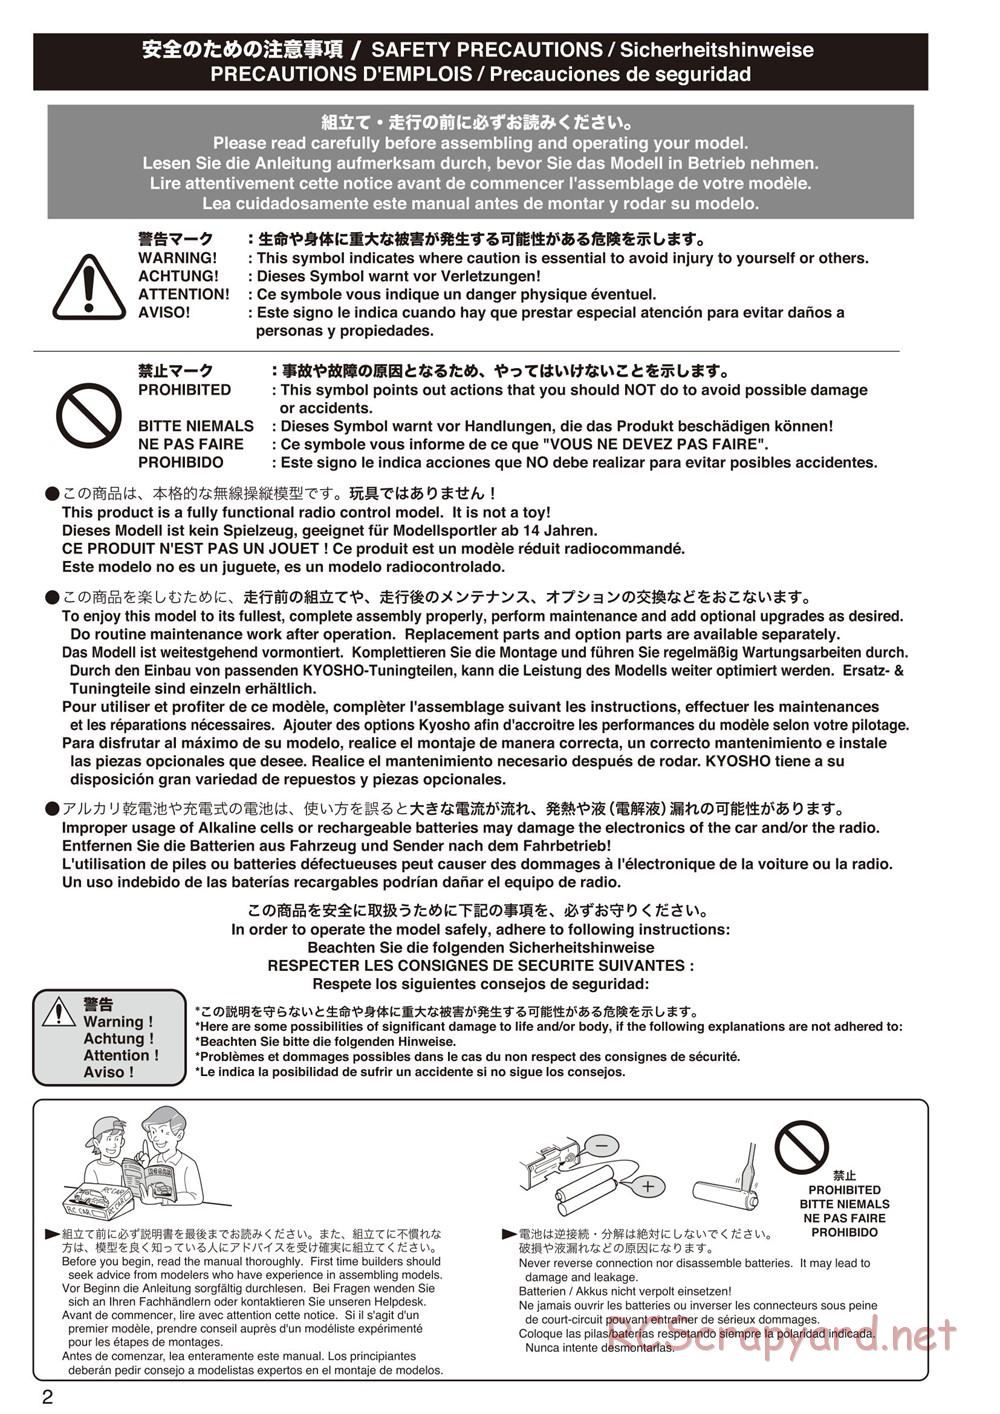 Kyosho - Mad Force Kruiser 2.0 VE - Manual - Page 2